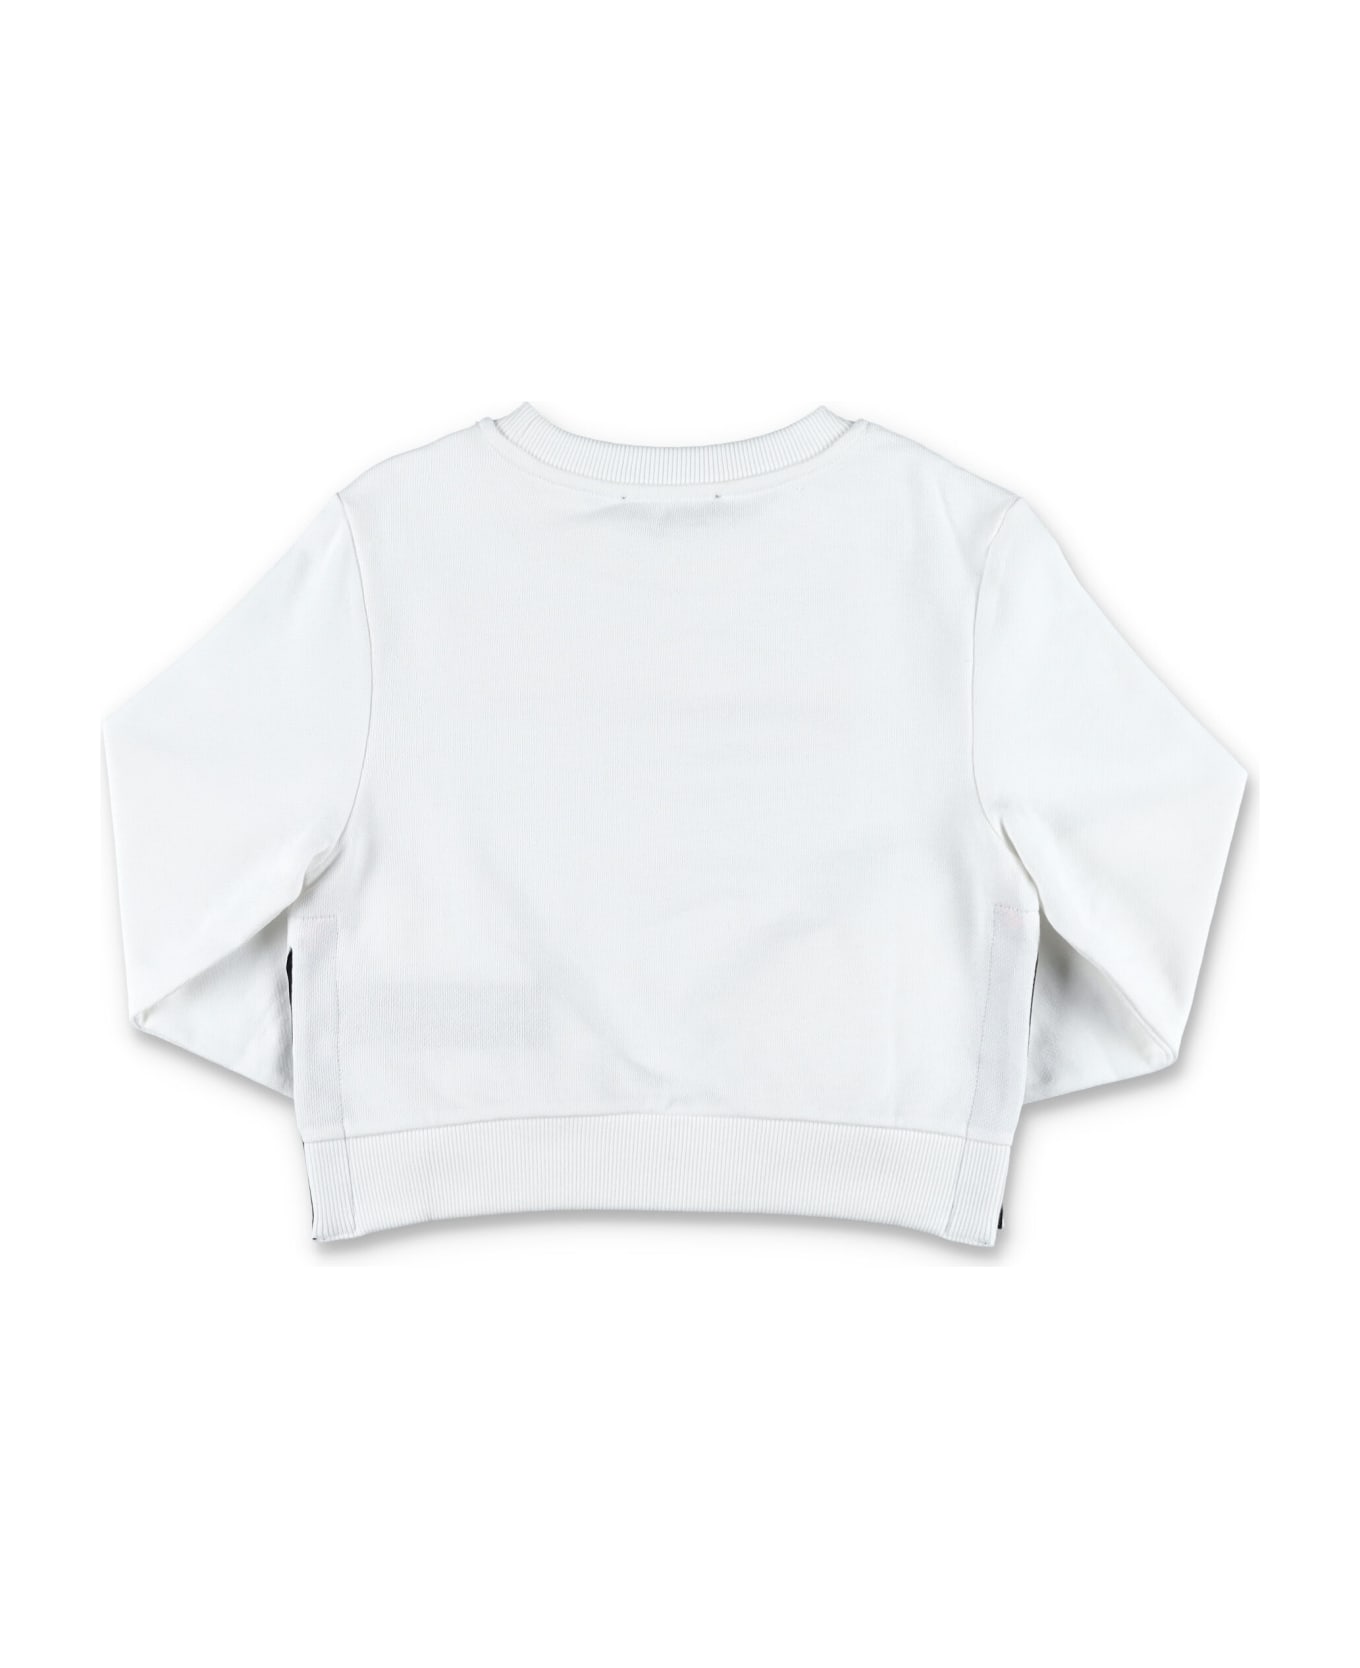 Balmain Paris Two-tone Sweatshirt - WHITE/FUCHSIA